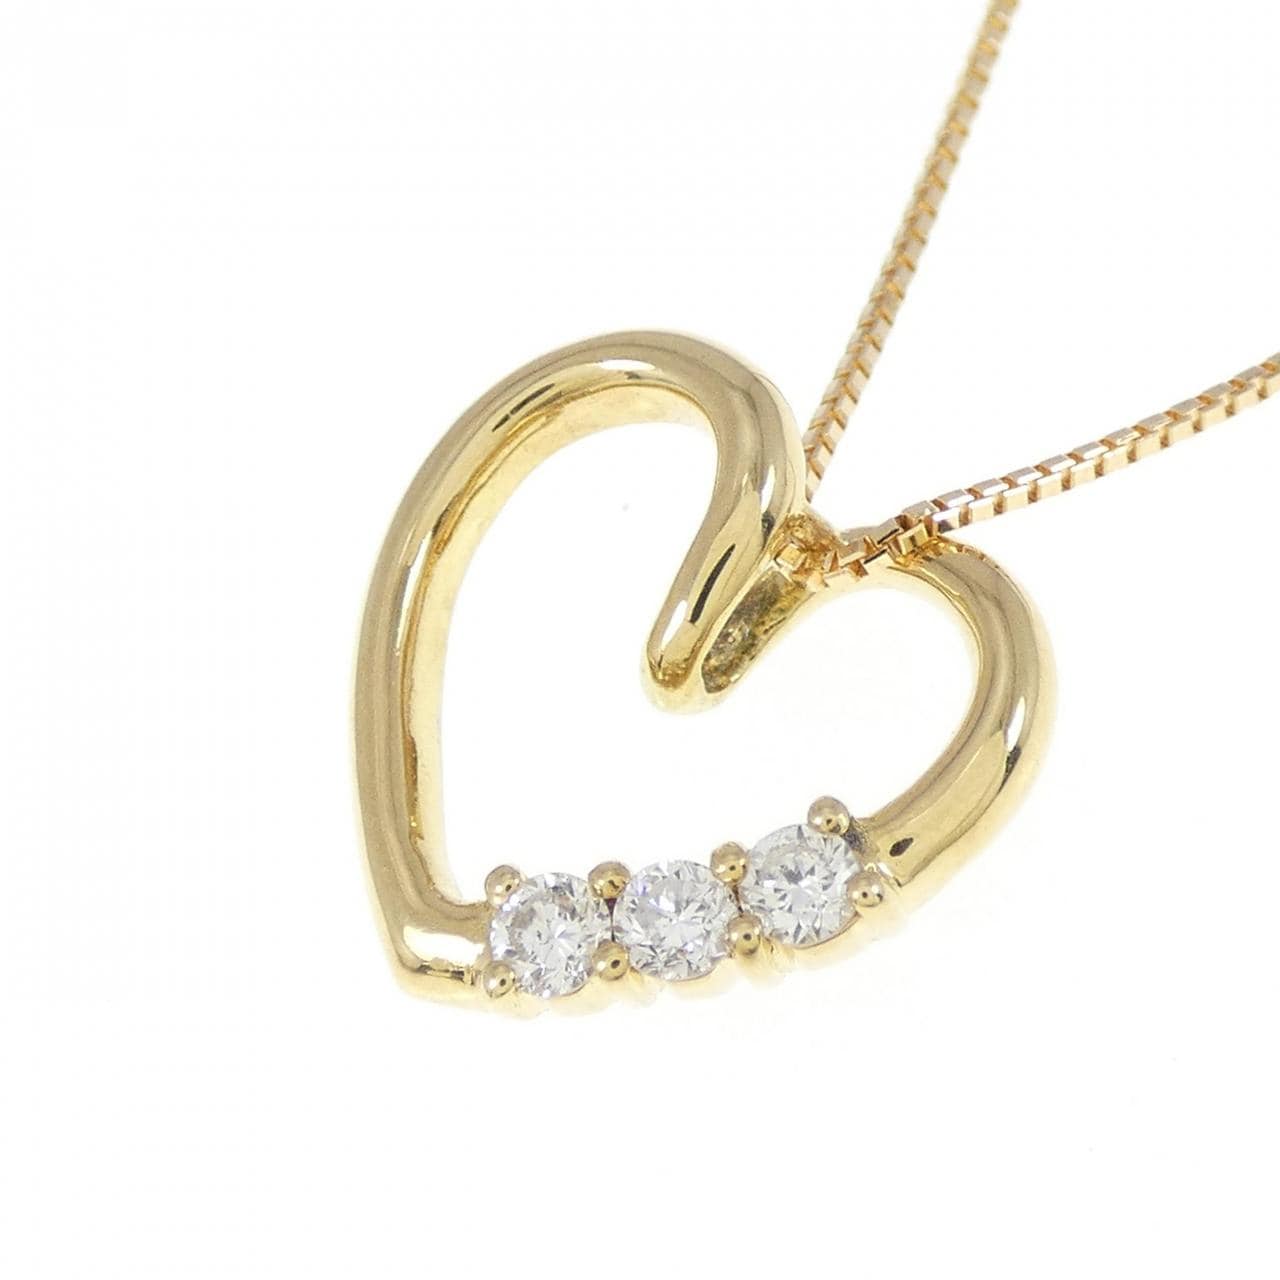 K18YG heart Diamond necklace 0.13CT